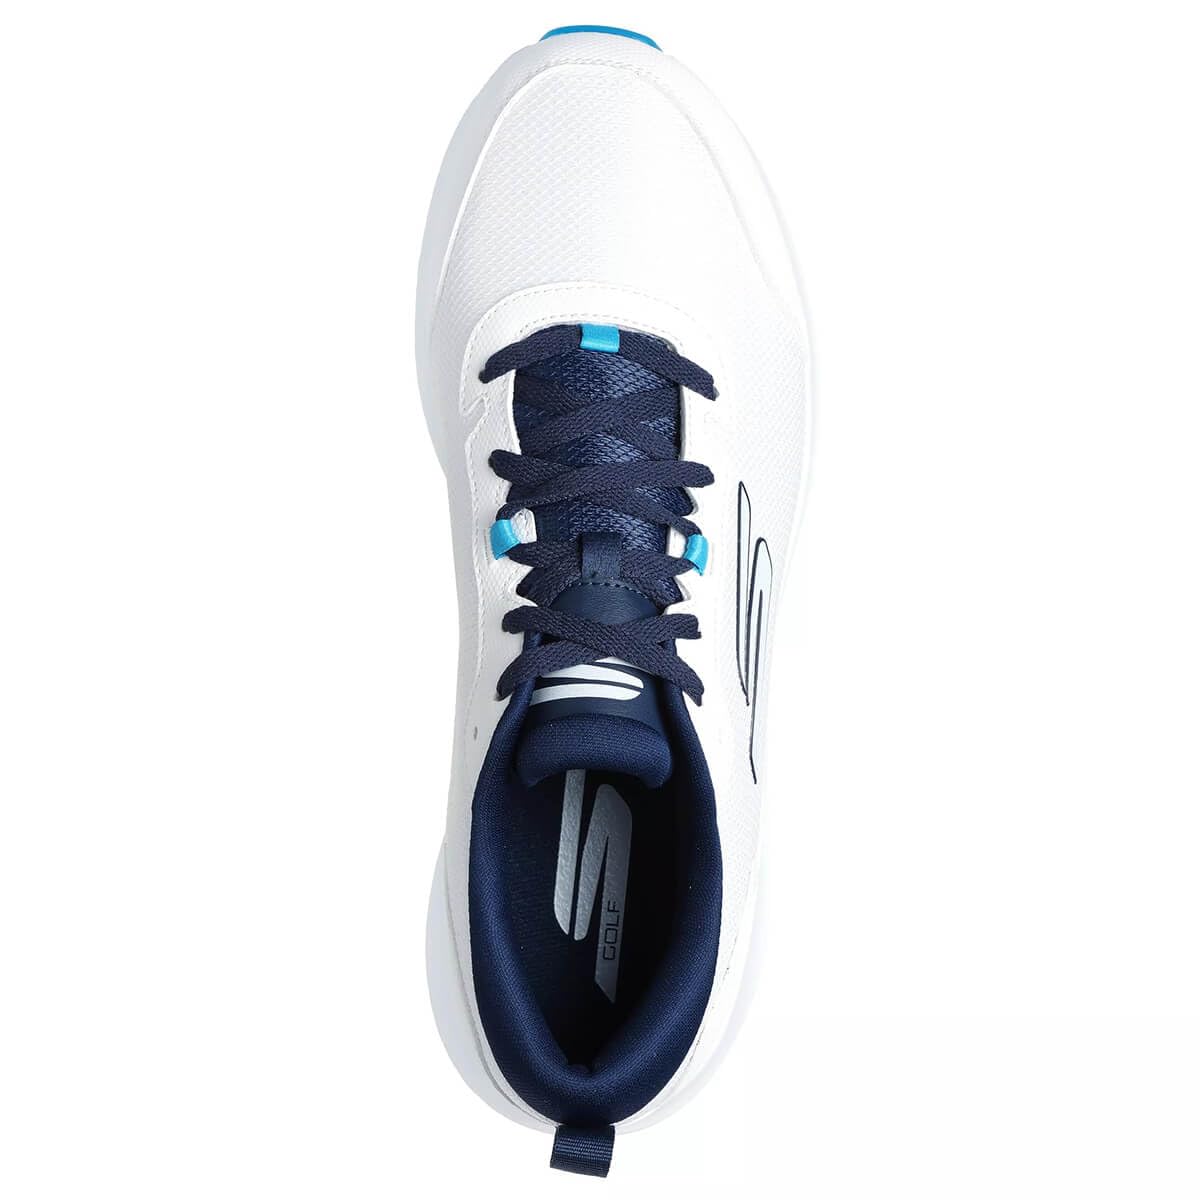 Skechers Men's Max Fairway 4 Lightweight Spikeless Golf Shoe Sneaker